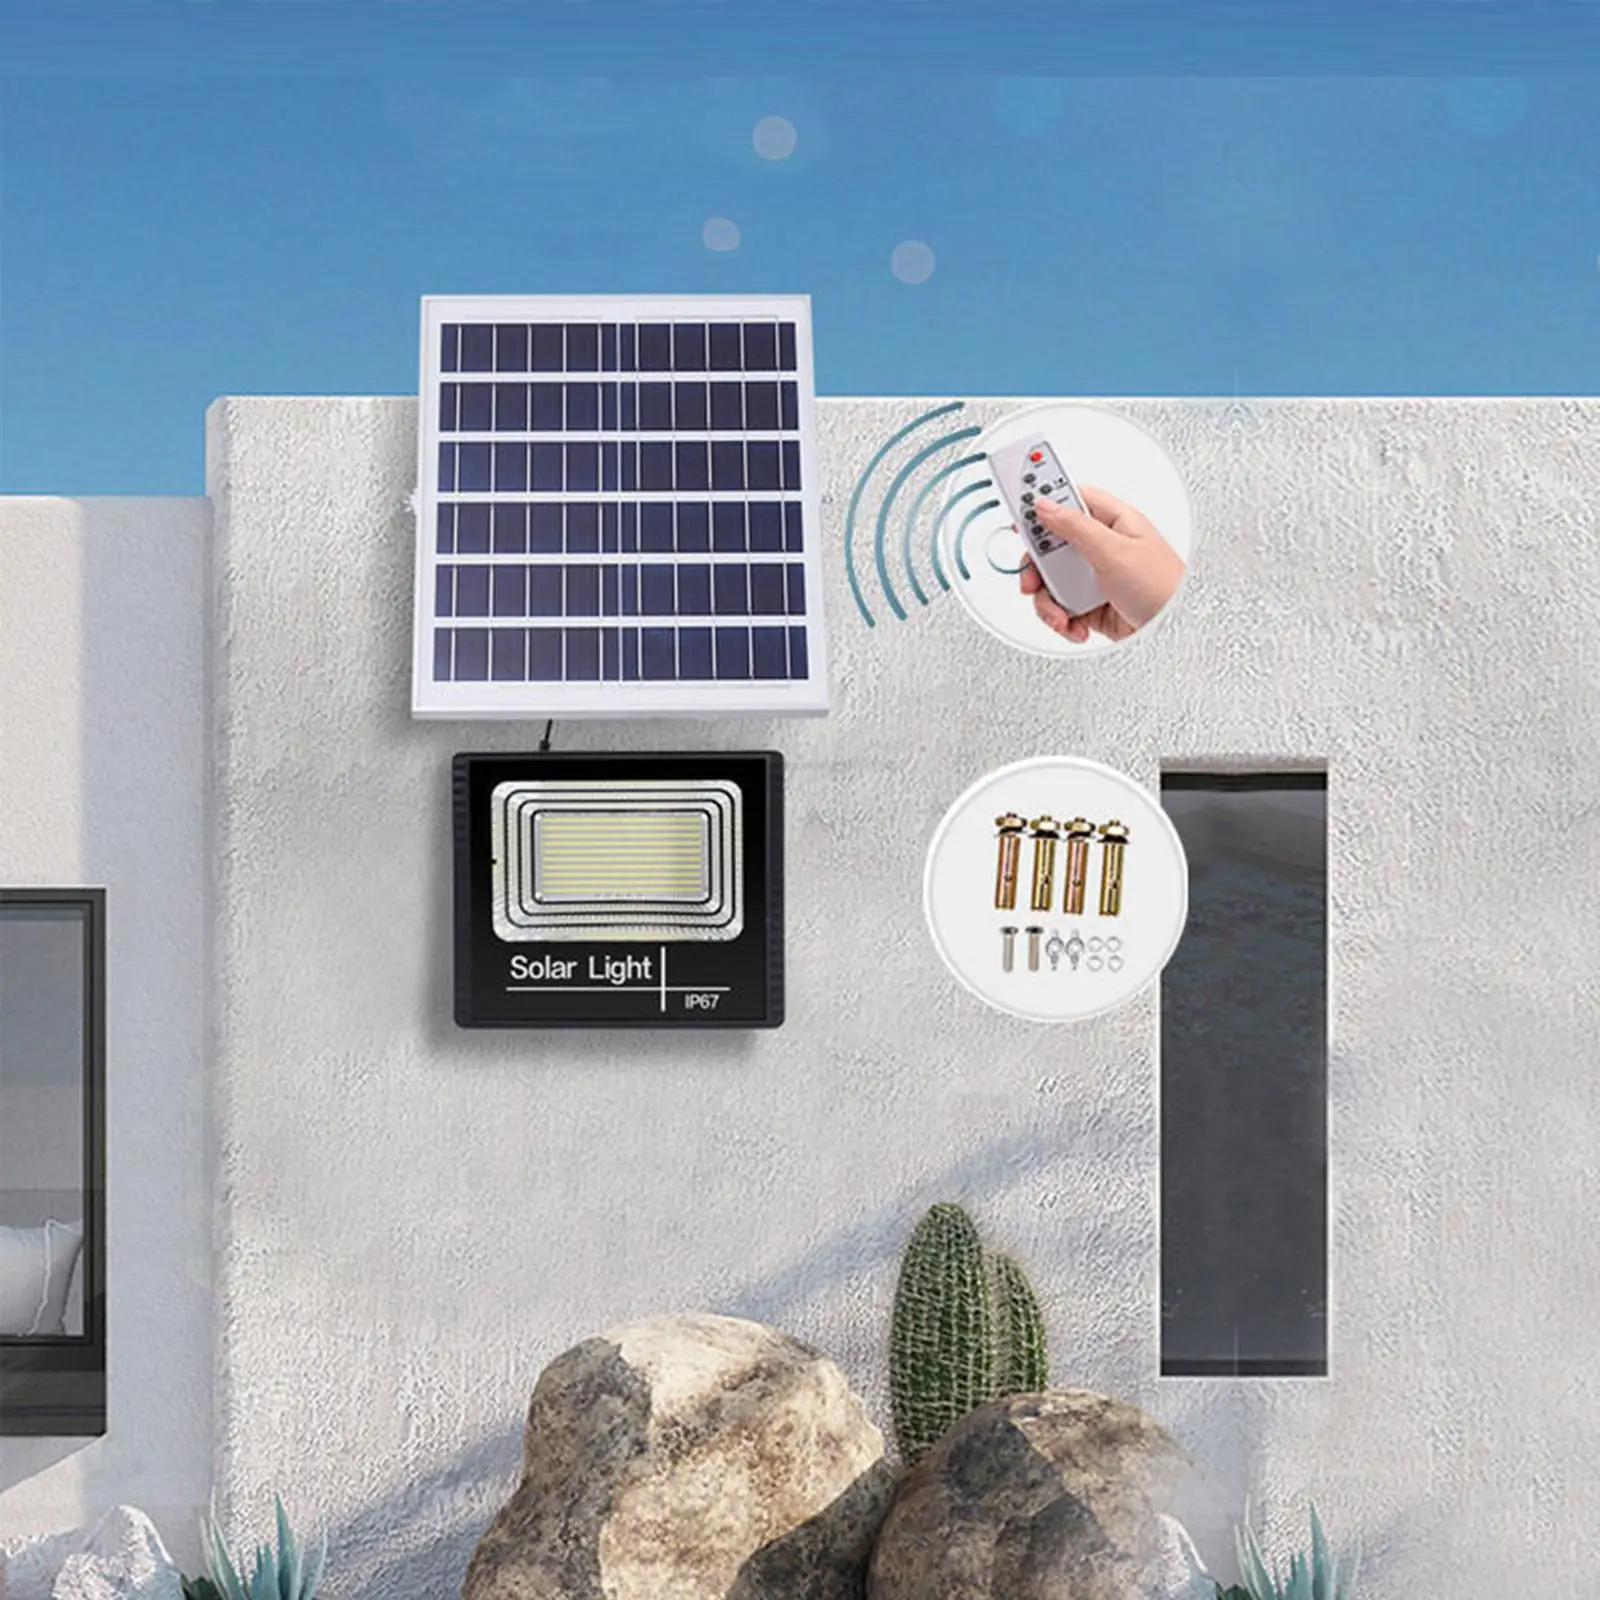 IP67 Waterproof Solar Flood Light with Remote Control for Street Lawn Patio Backyard Yard